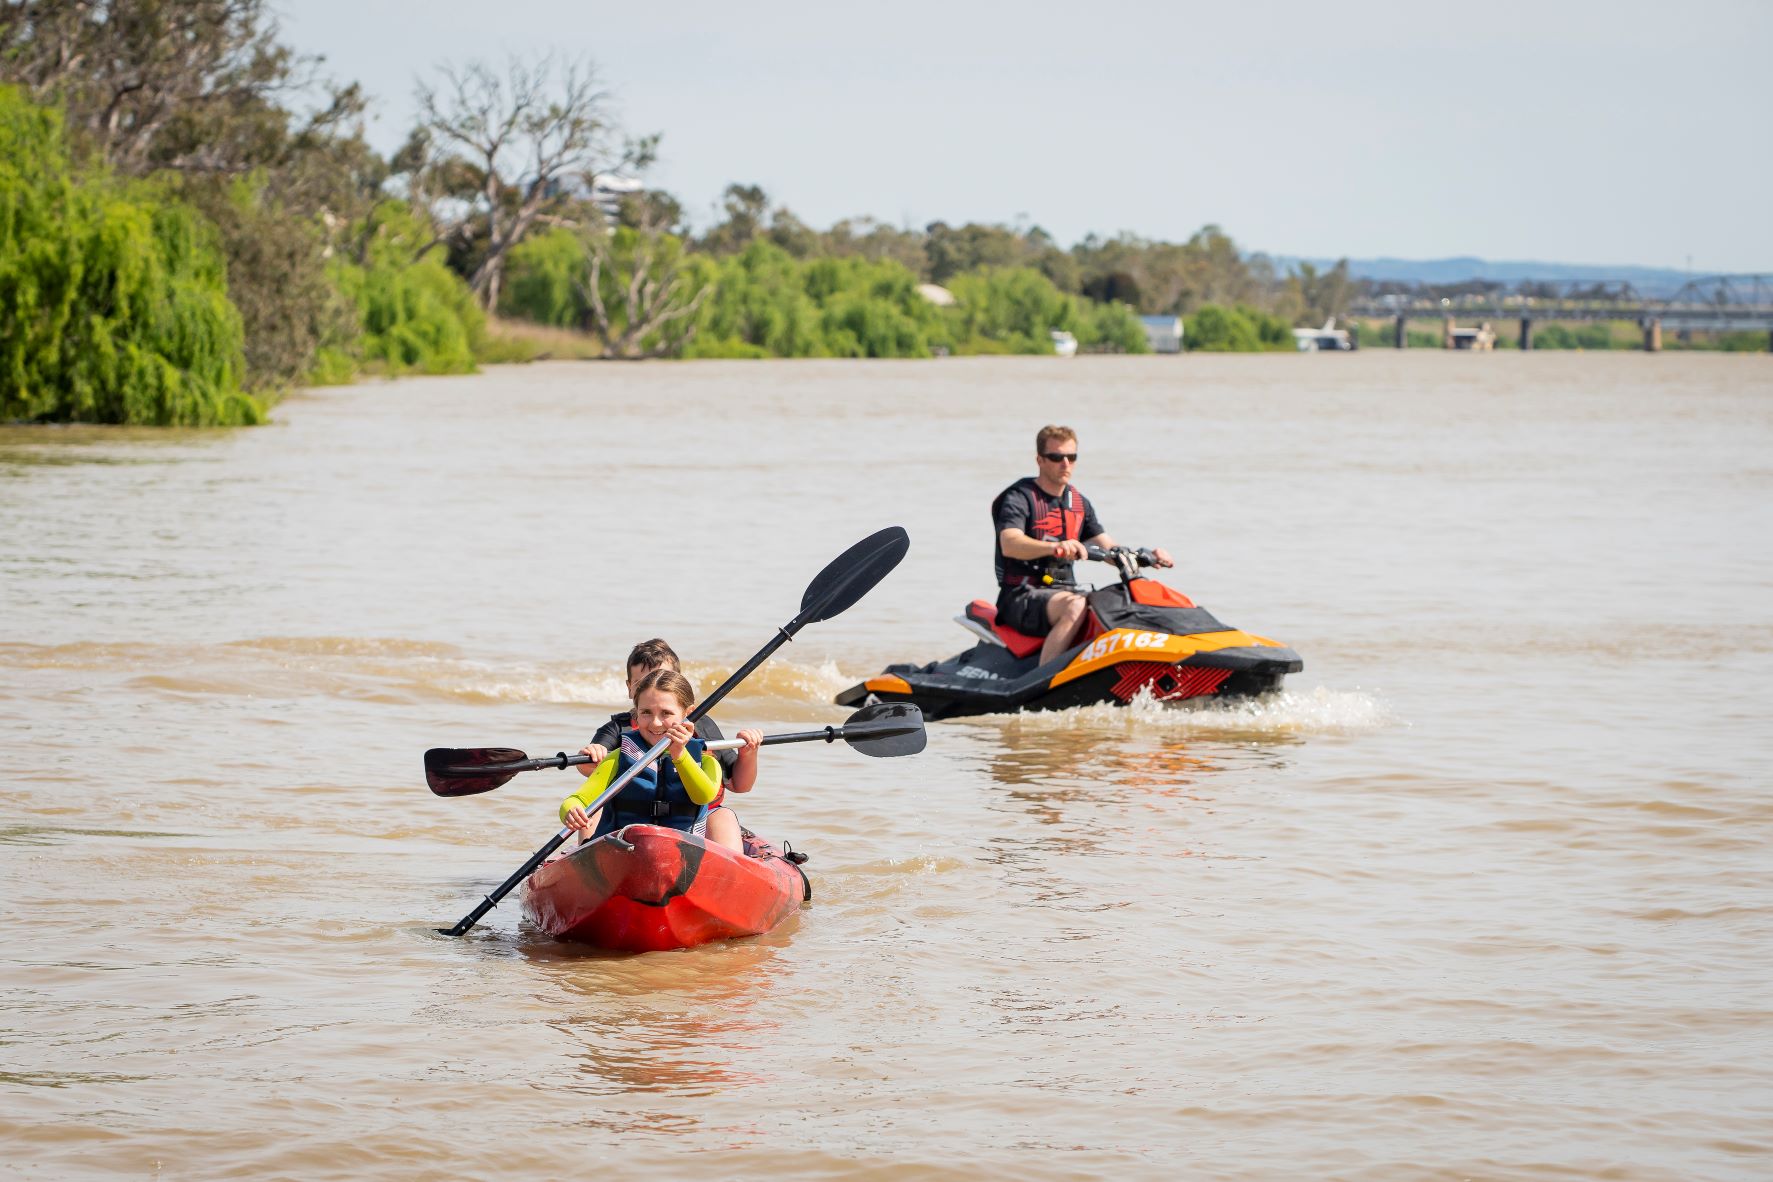 Jetski doing 4 knots on the river near 2 children kayaking